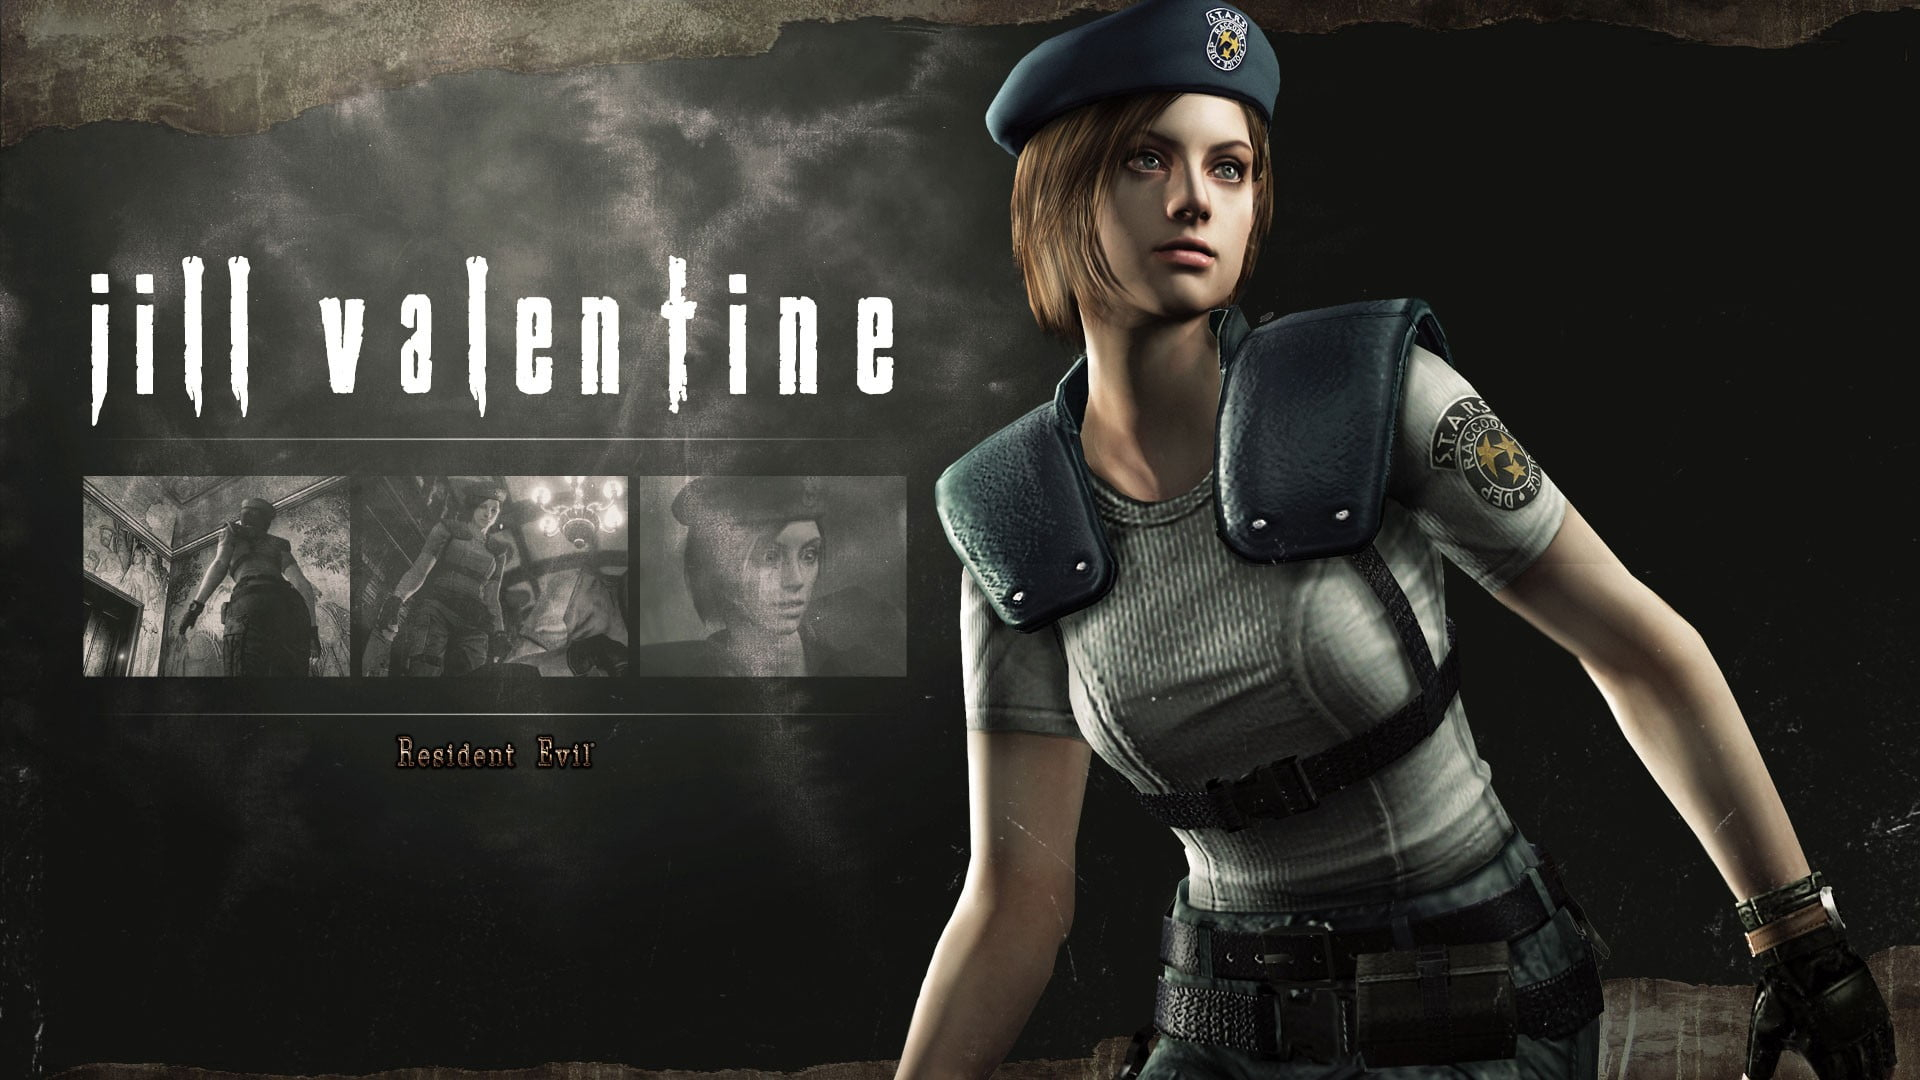 1920x1080 Jill Valentine digital wallpaper, Jill Valentine, Resident Evil HD Remaster, Resident Evil HD wallpaper